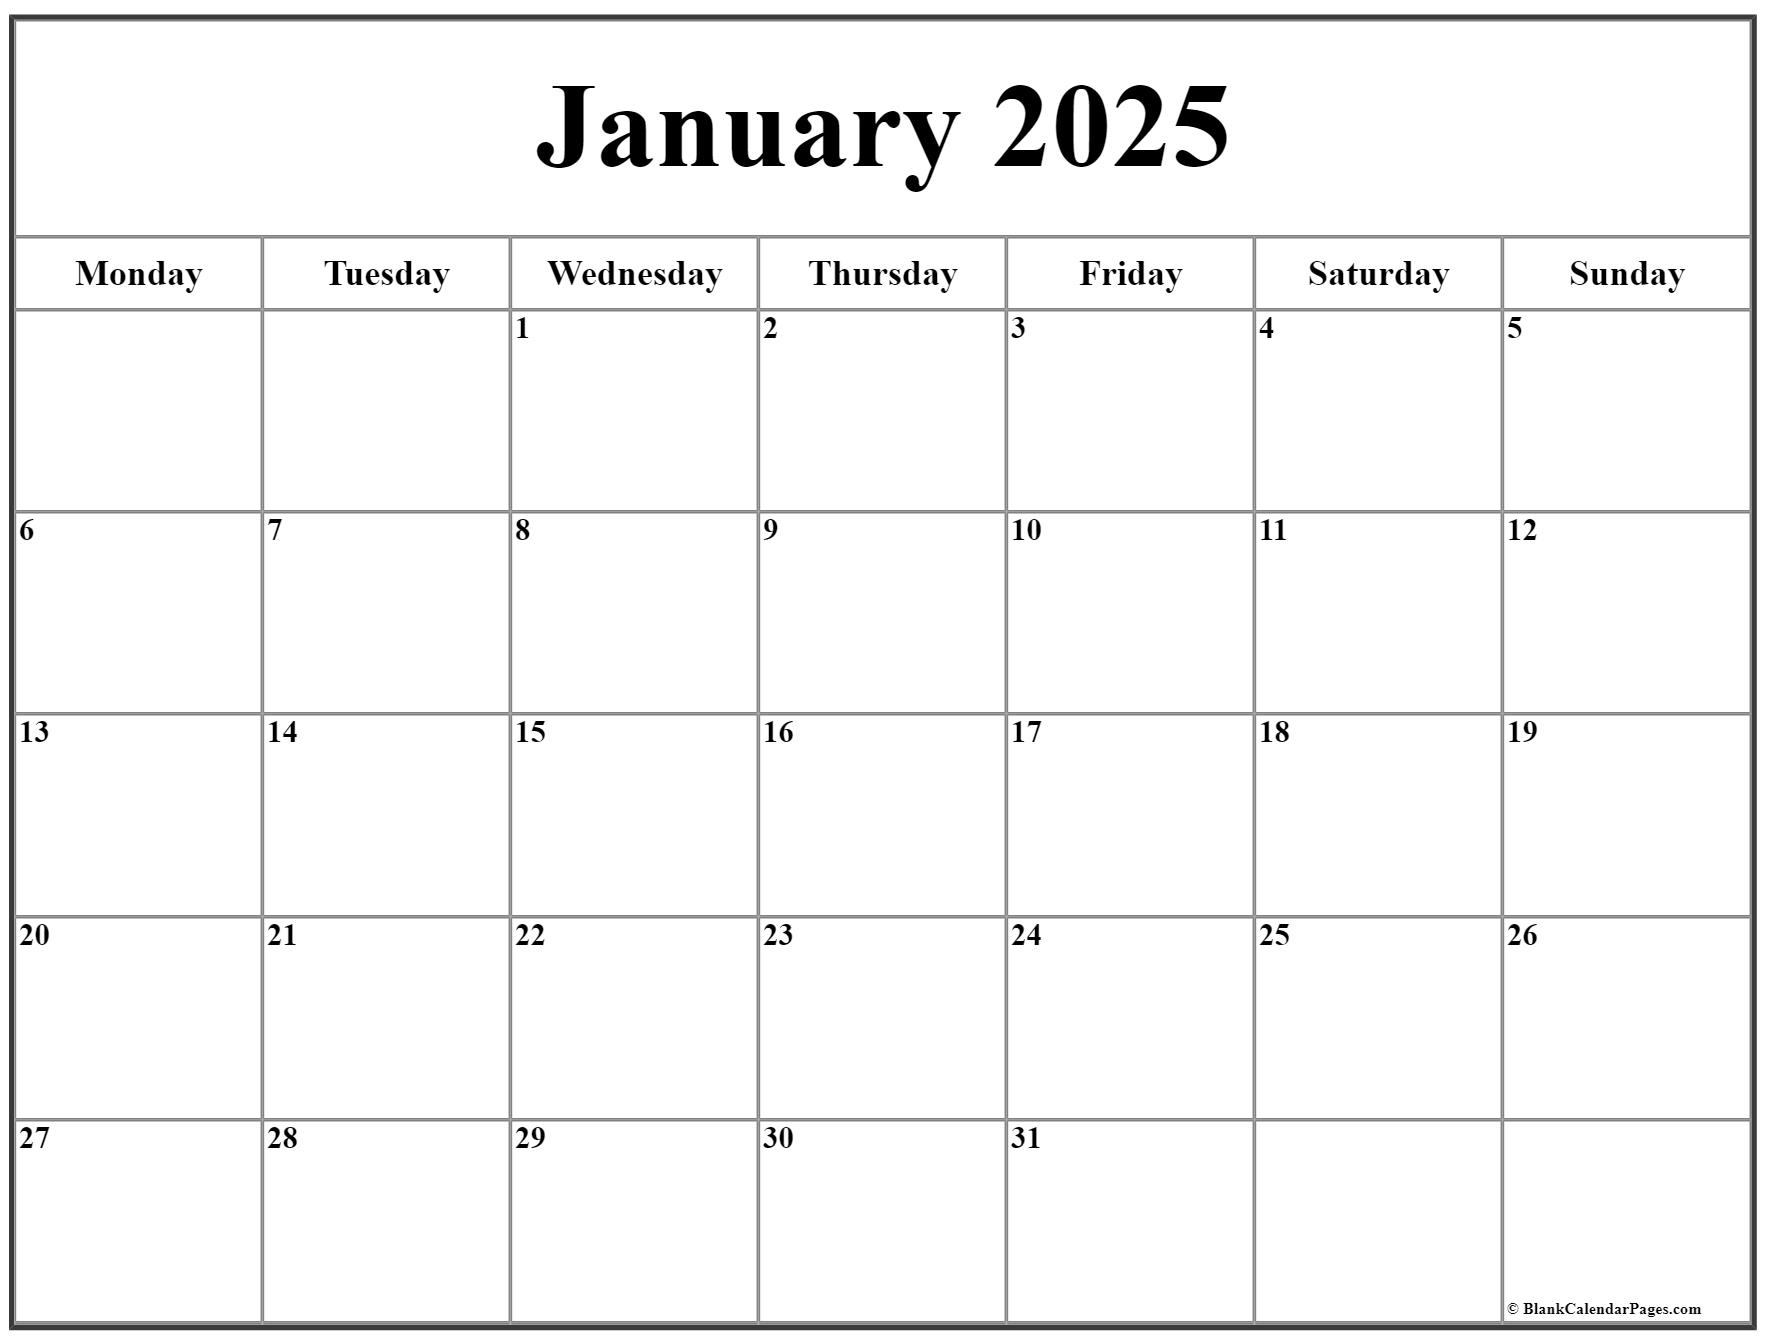 january-2025-monday-calendar-monday-to-sunday